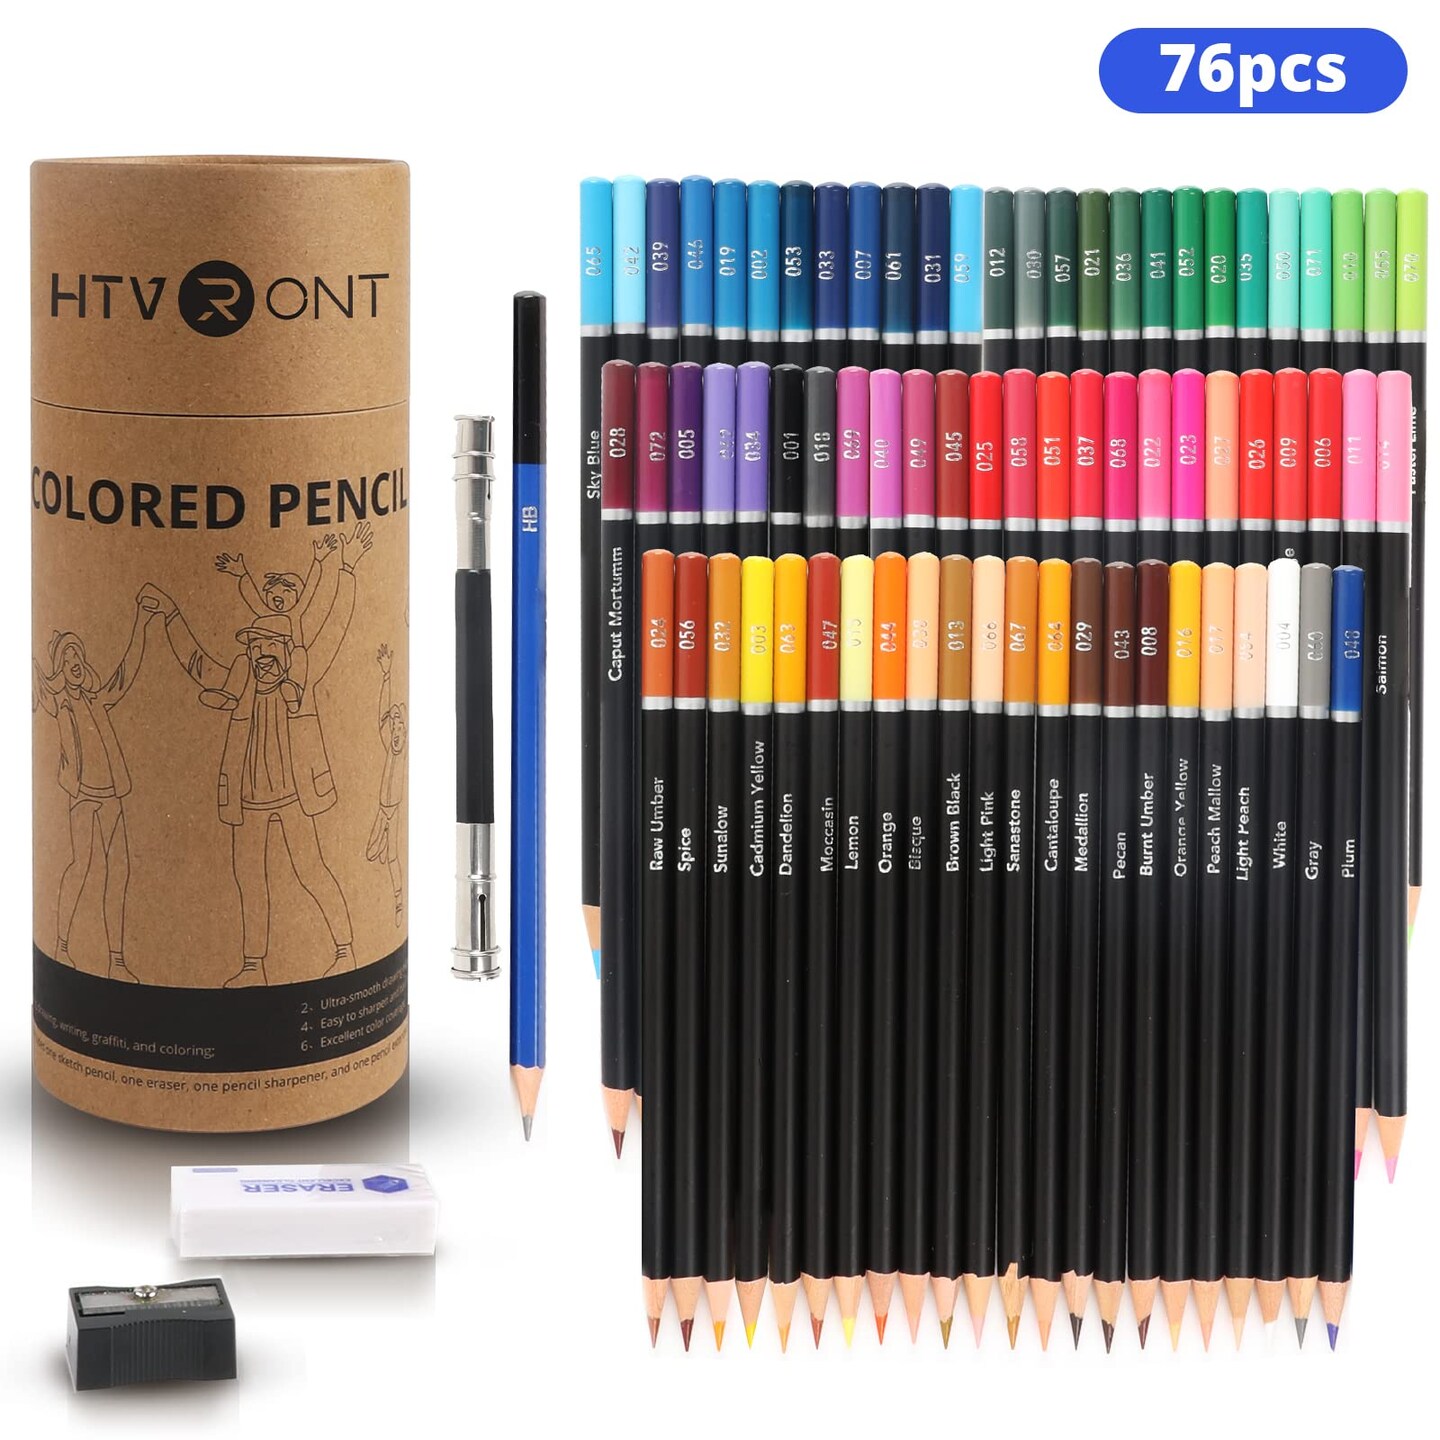 HTVRONT Colored Pencils - 72PCS Colored Pencils for Adult Coloring, No Break Coloring Pencils, Vibrant Color, Easy to Sharpen Color Pencils, Includes Sketch Pencil, Sharpener, Eraser, Extender